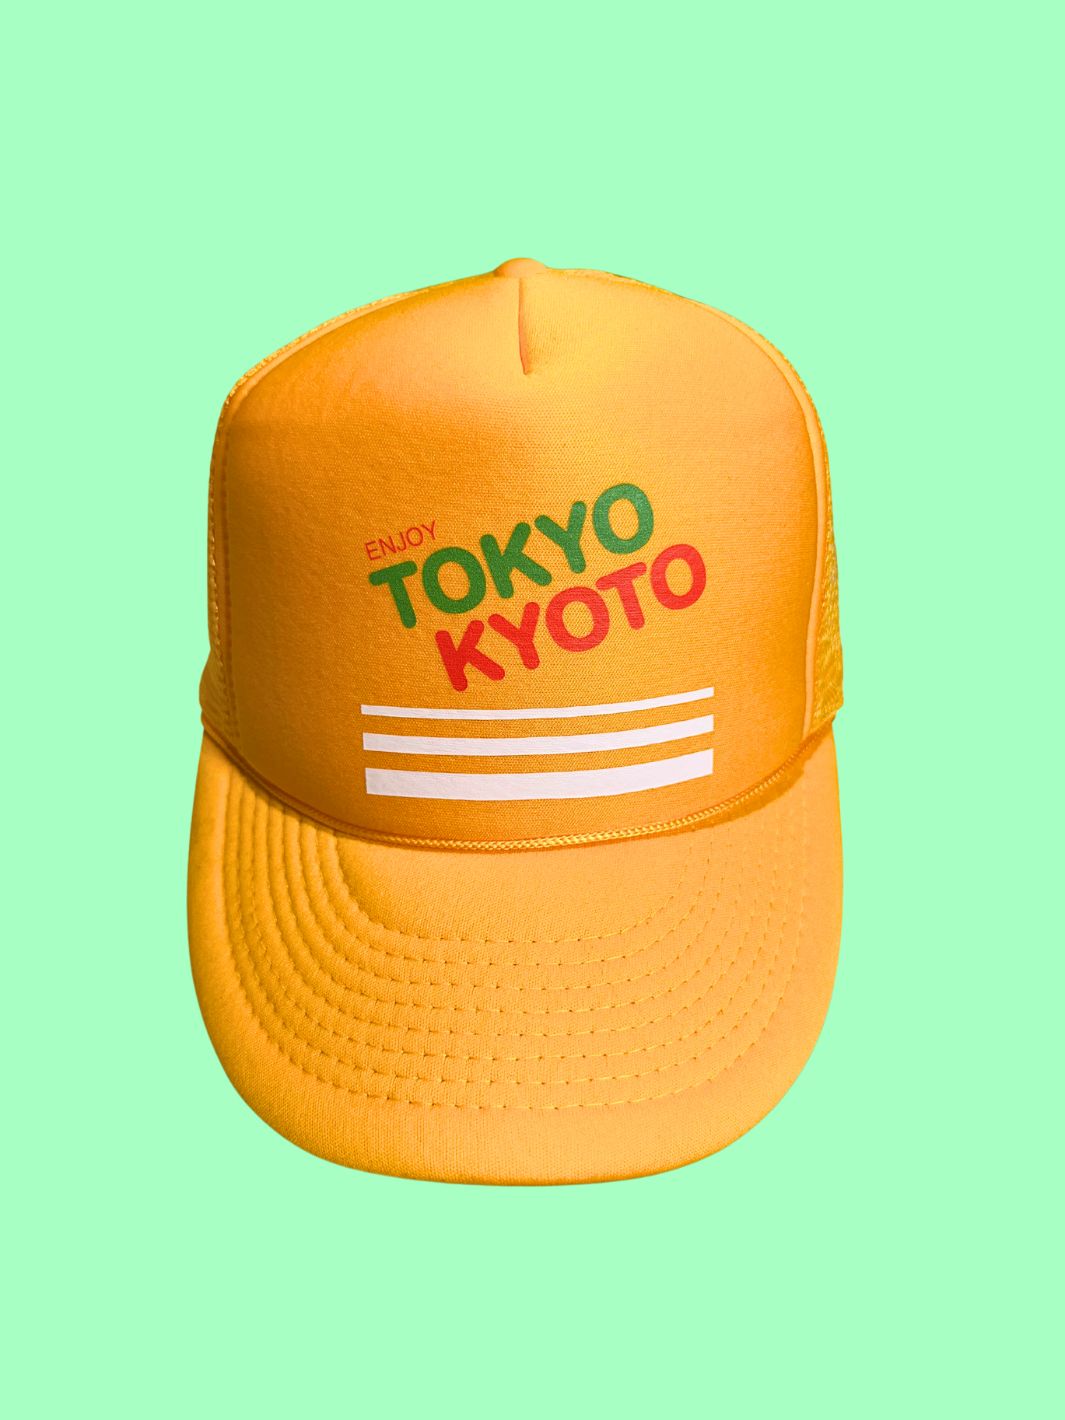 Tokyo Kyoto Mesh Hat